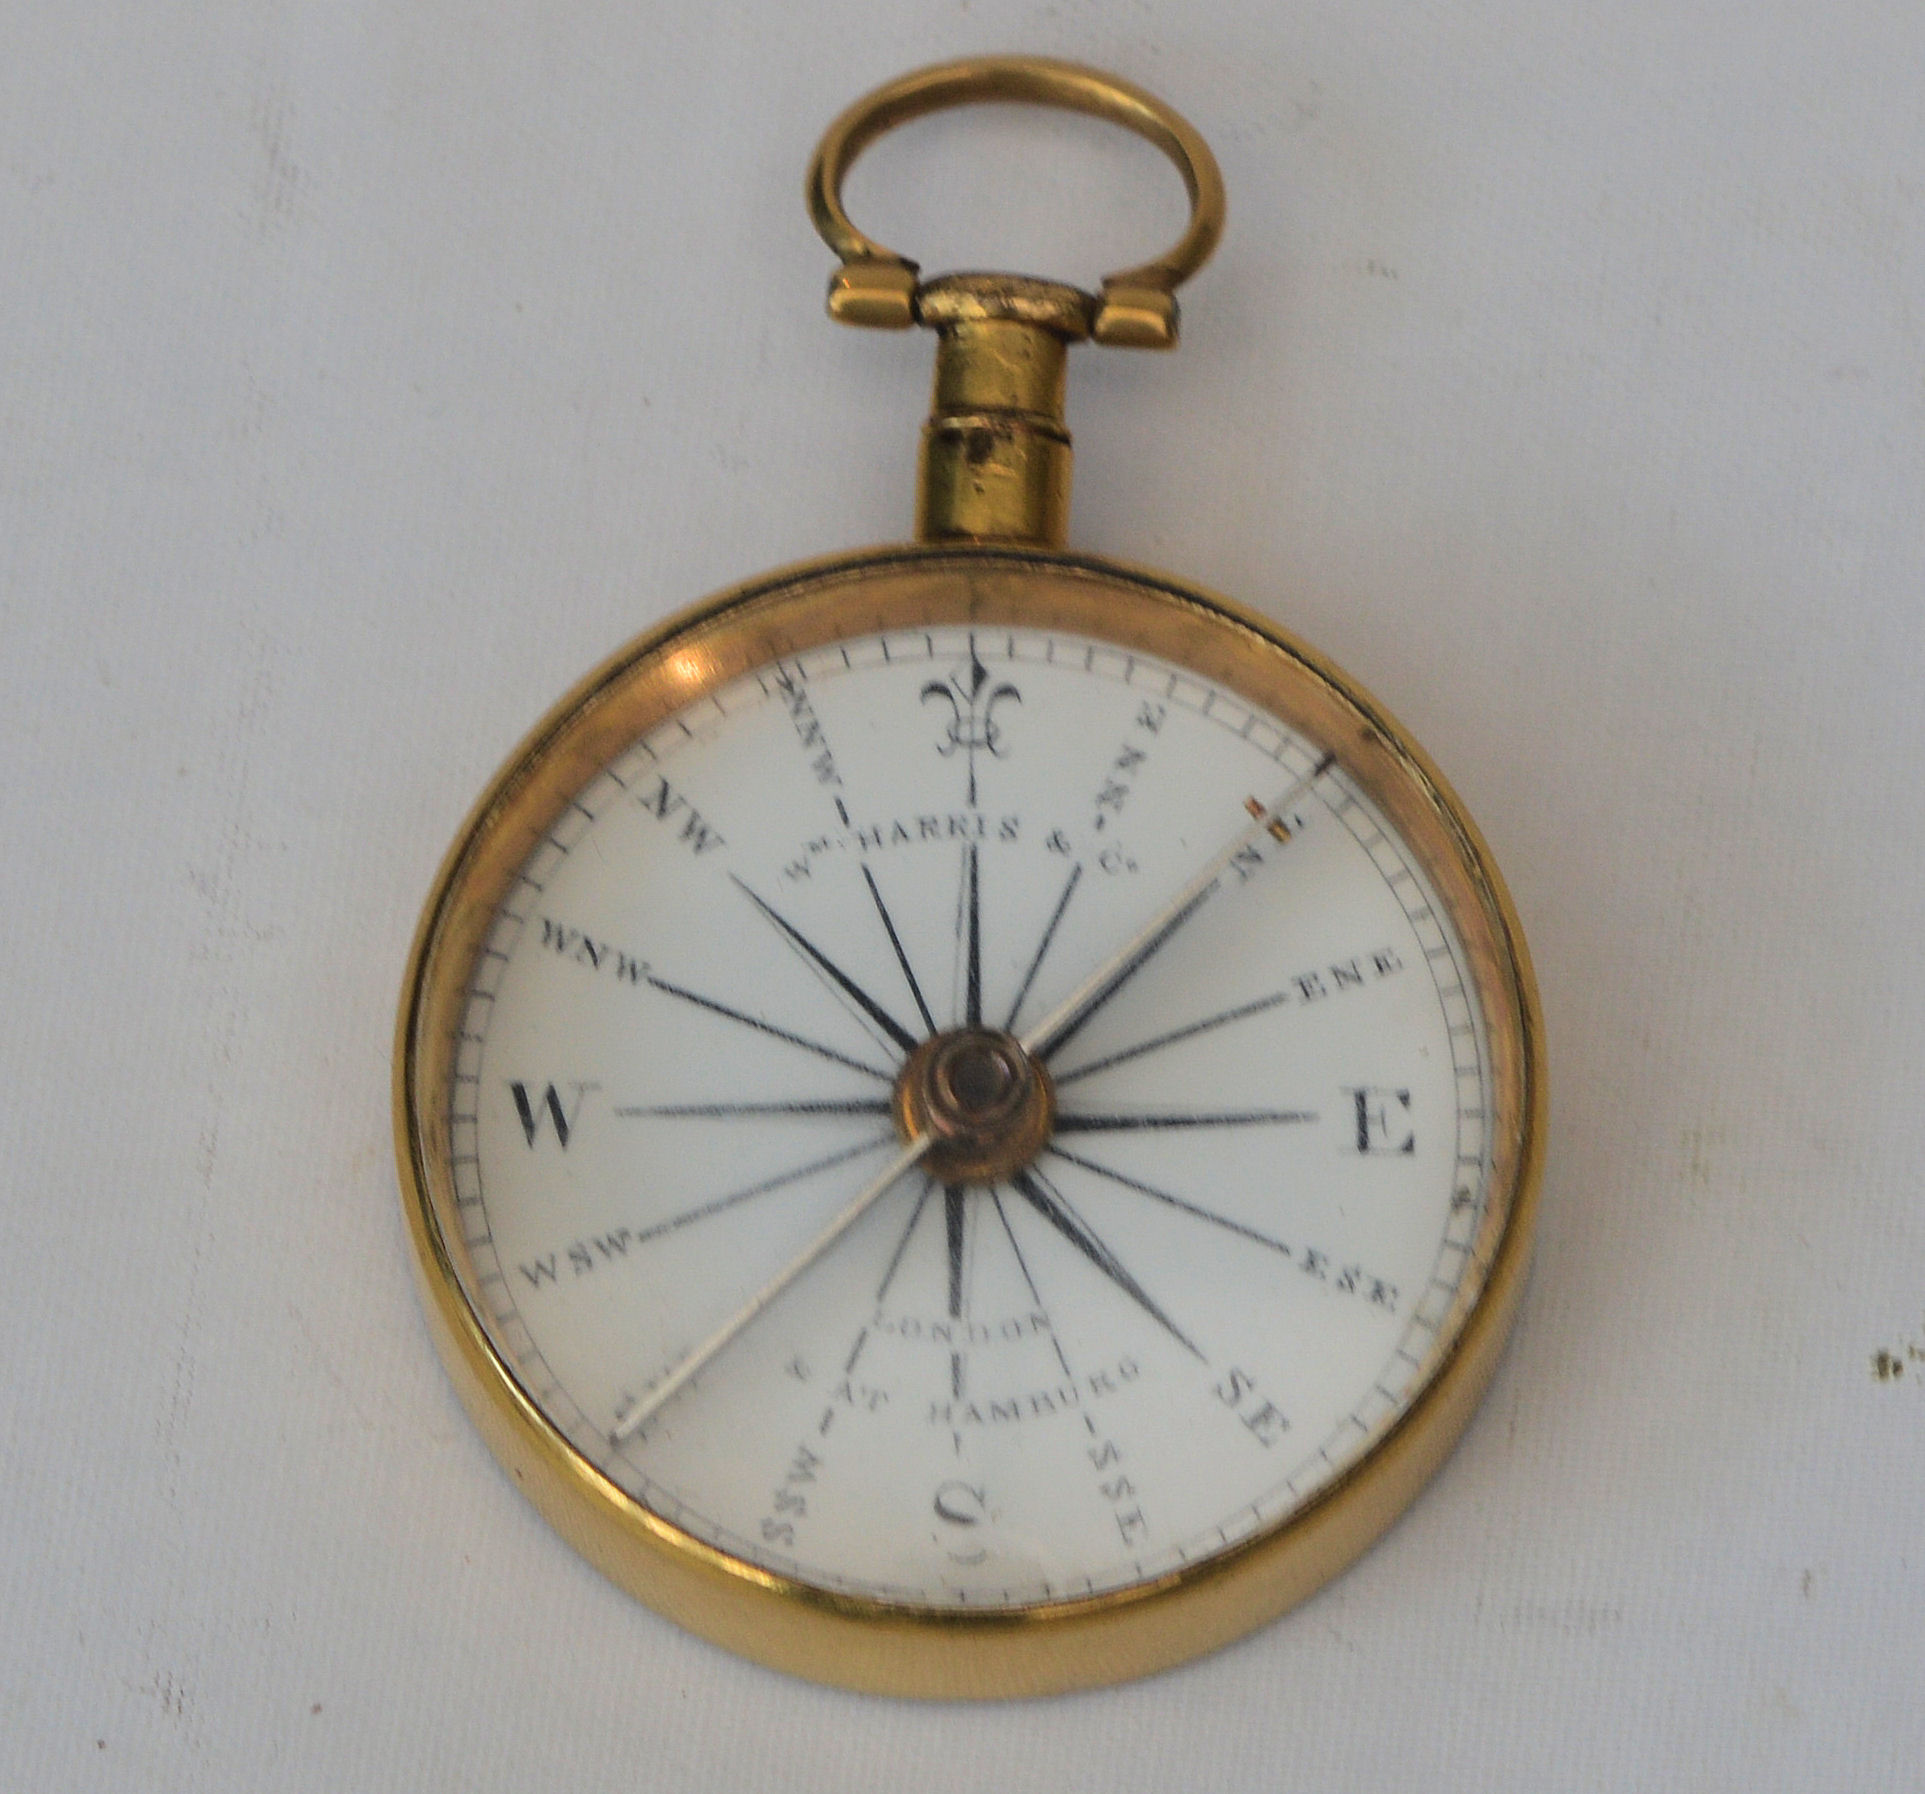 Georgian compass – William Harris & Co.